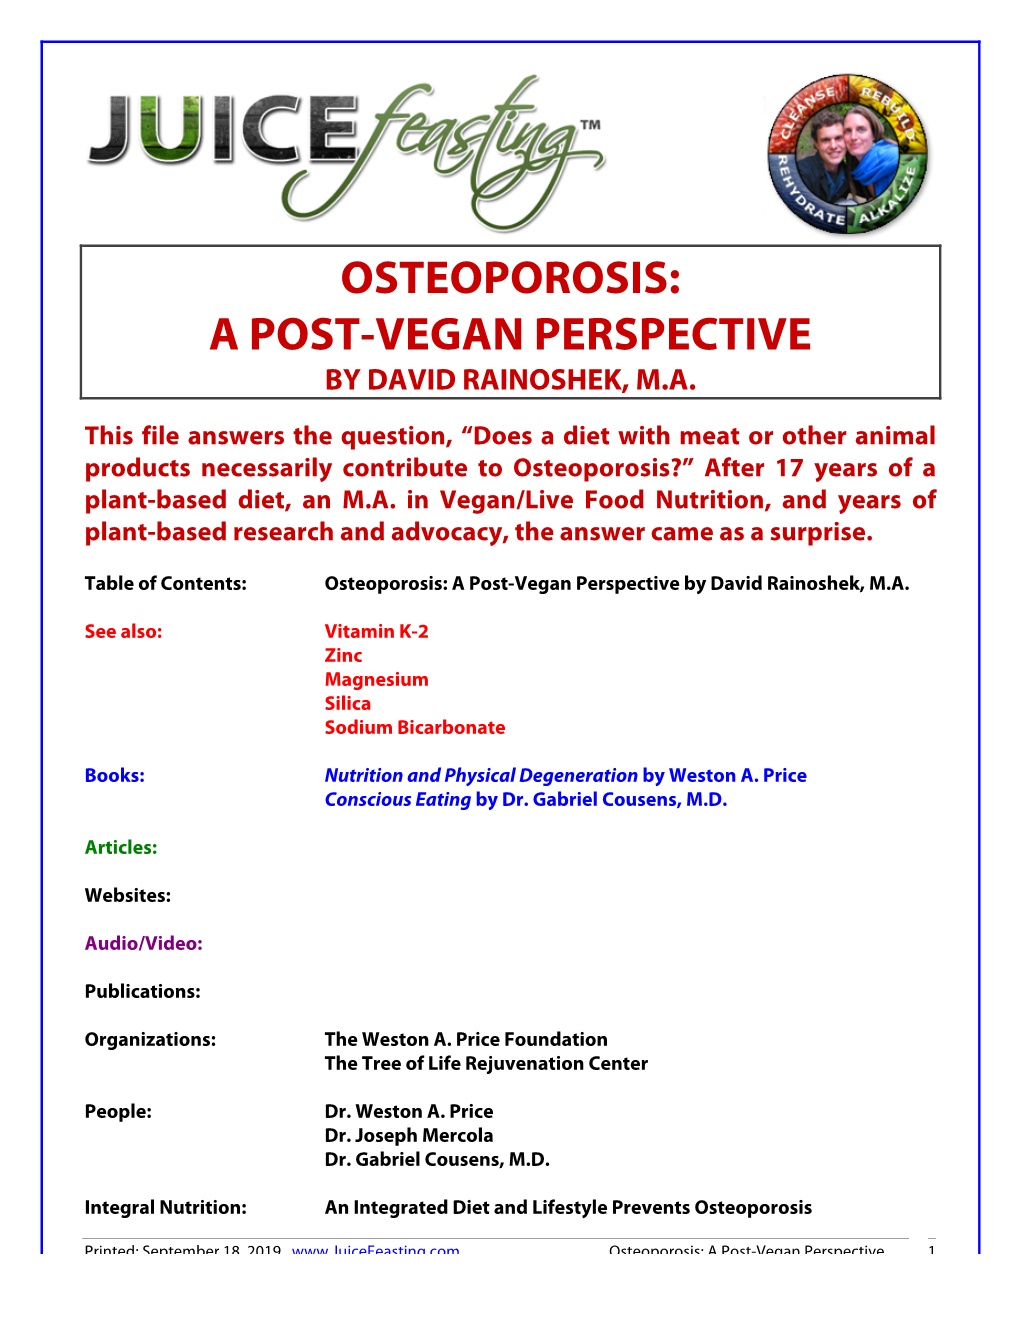 Osteoporosis: a Post-Vegan Perspective by David Rainoshek, M.A